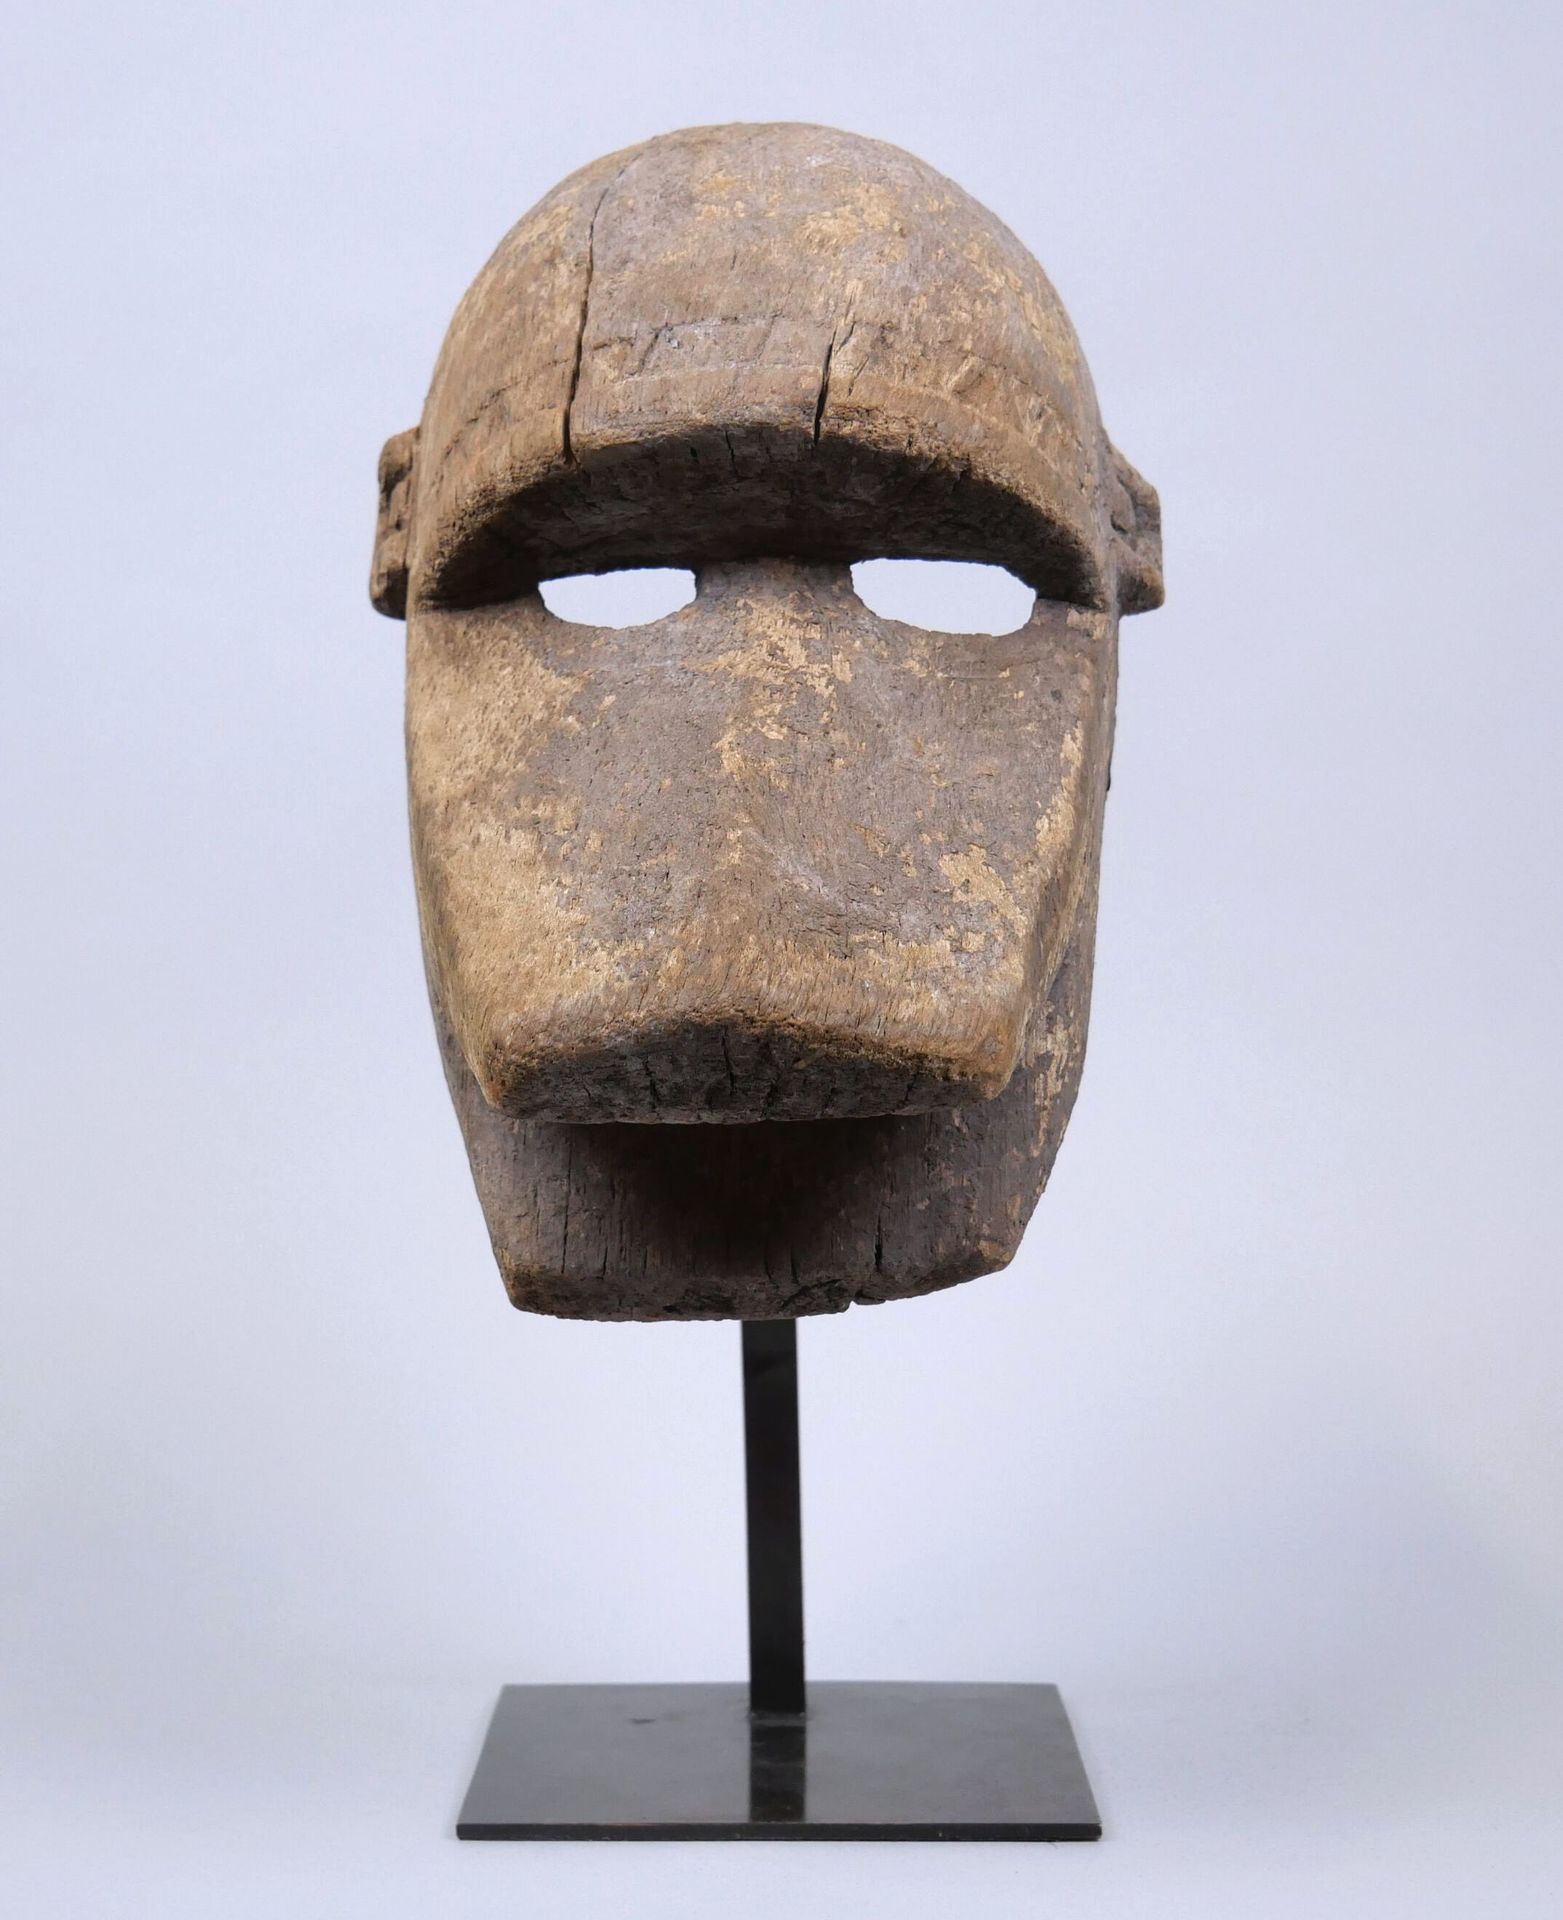 Null 马里 - 多贡人
木制猴子面具，带泥土色。
前额有美丽的几何装饰。
高度：26.5 厘米
底座

拍品可于 5 月 14 日星期二在巴黎第十五区（Mé&hellip;